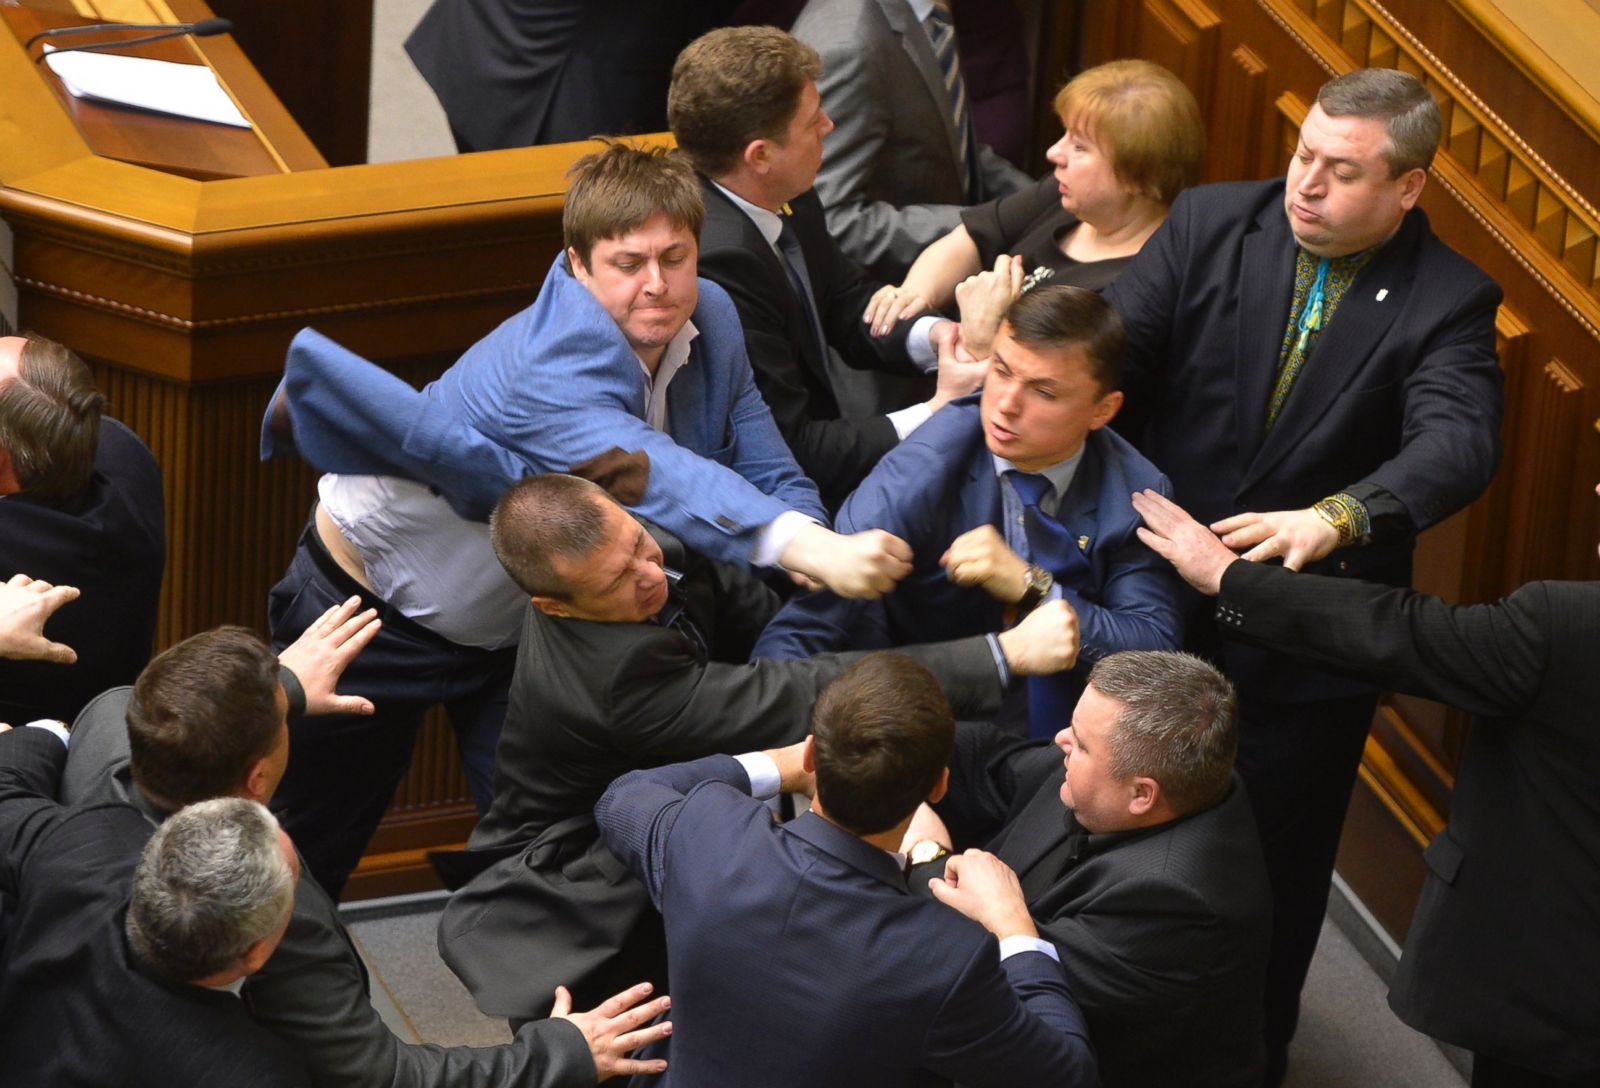 Ukraine parliament brawl